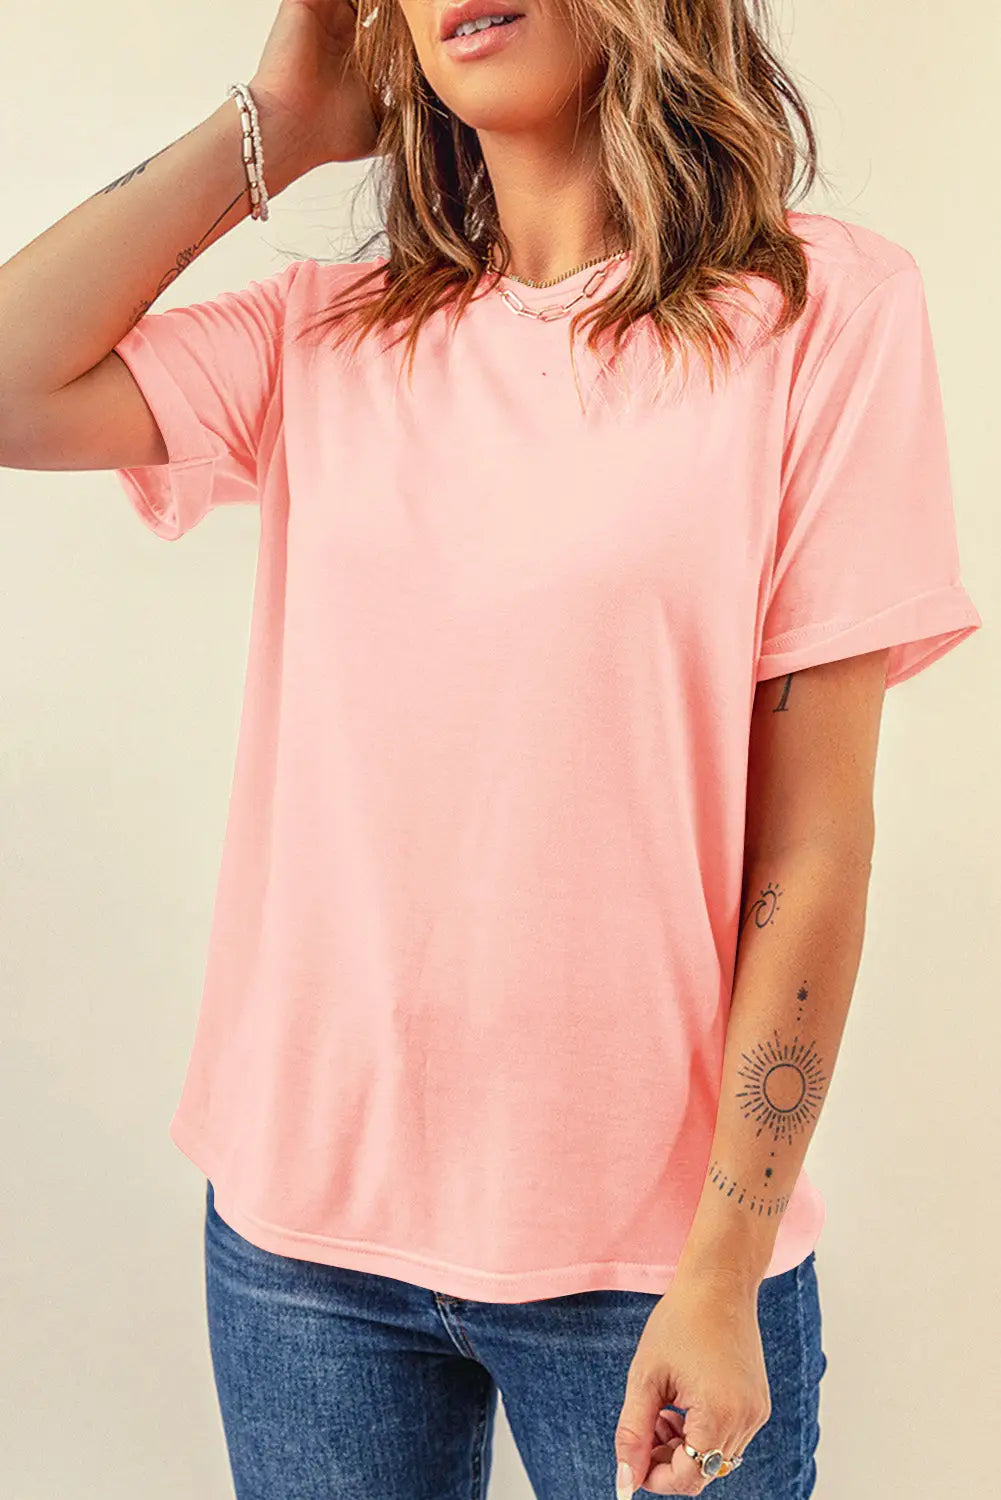 Gray casual plain crew neck tee - pink / 2xl / 62% polyester + 32% cotton + 6% elastane - t-shirts